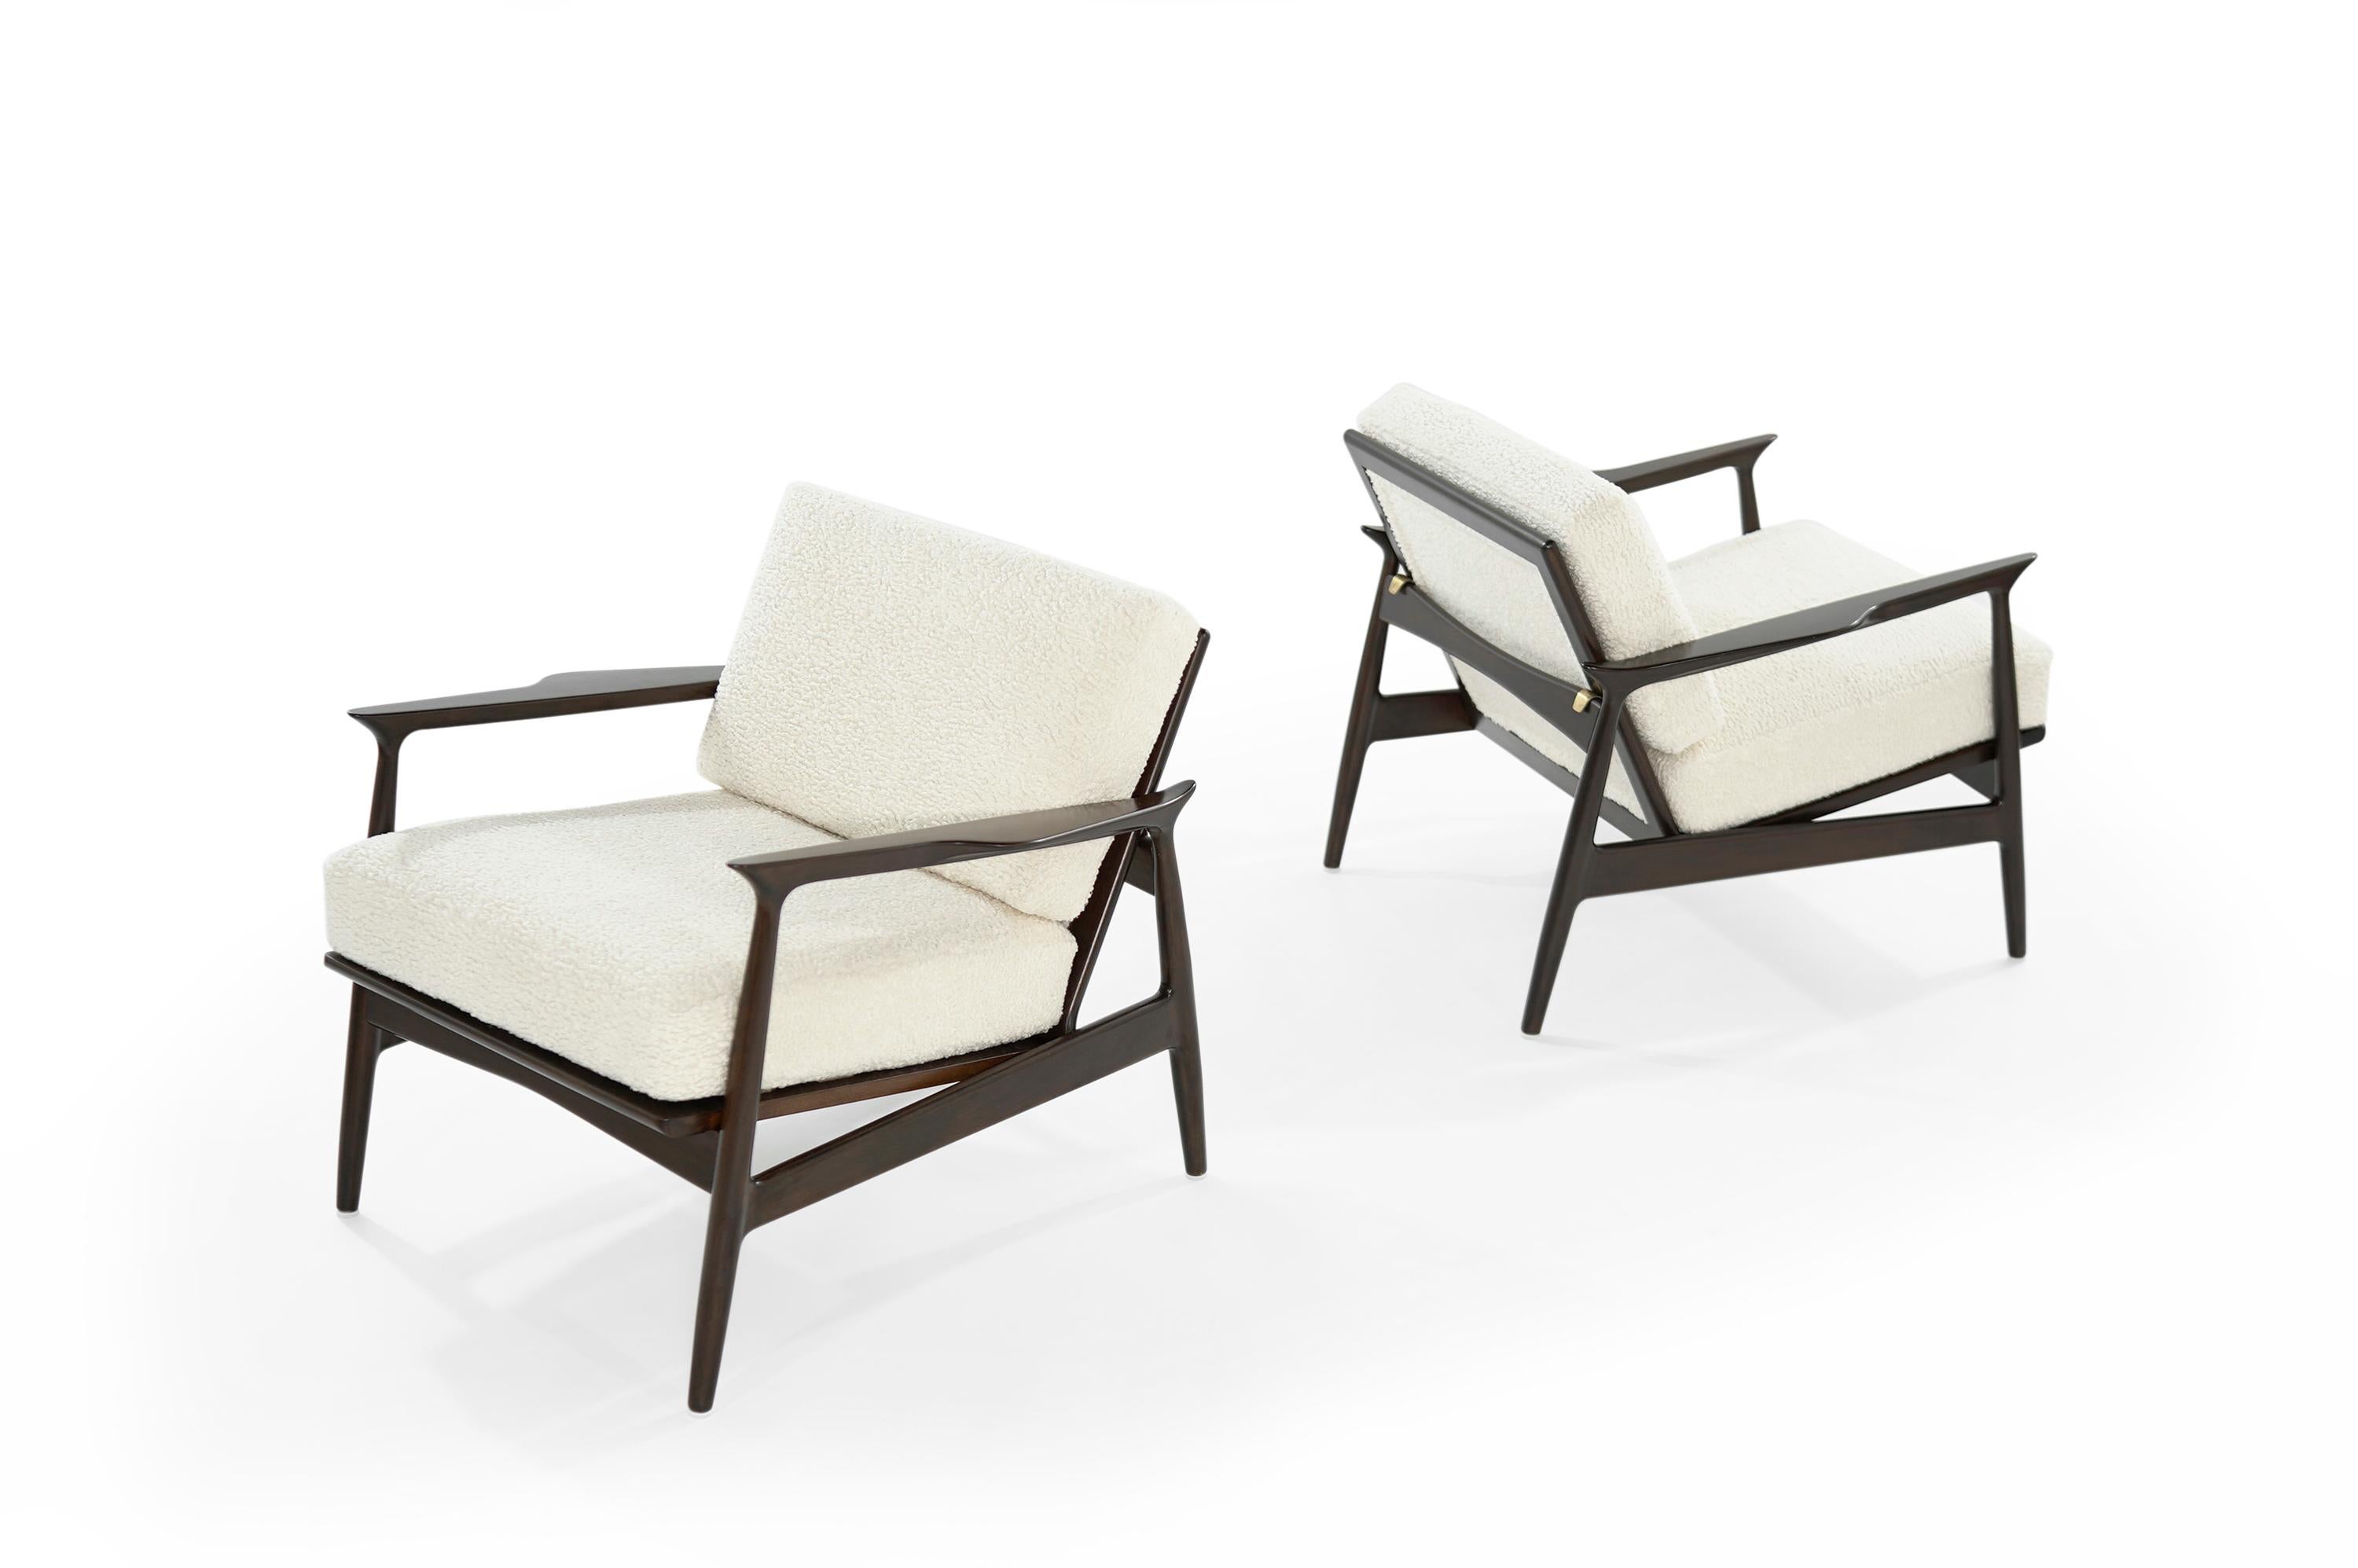 20th Century Scandinavian Modern Lounge Chairs by Ib Kofod-Larsen, circa 1950s